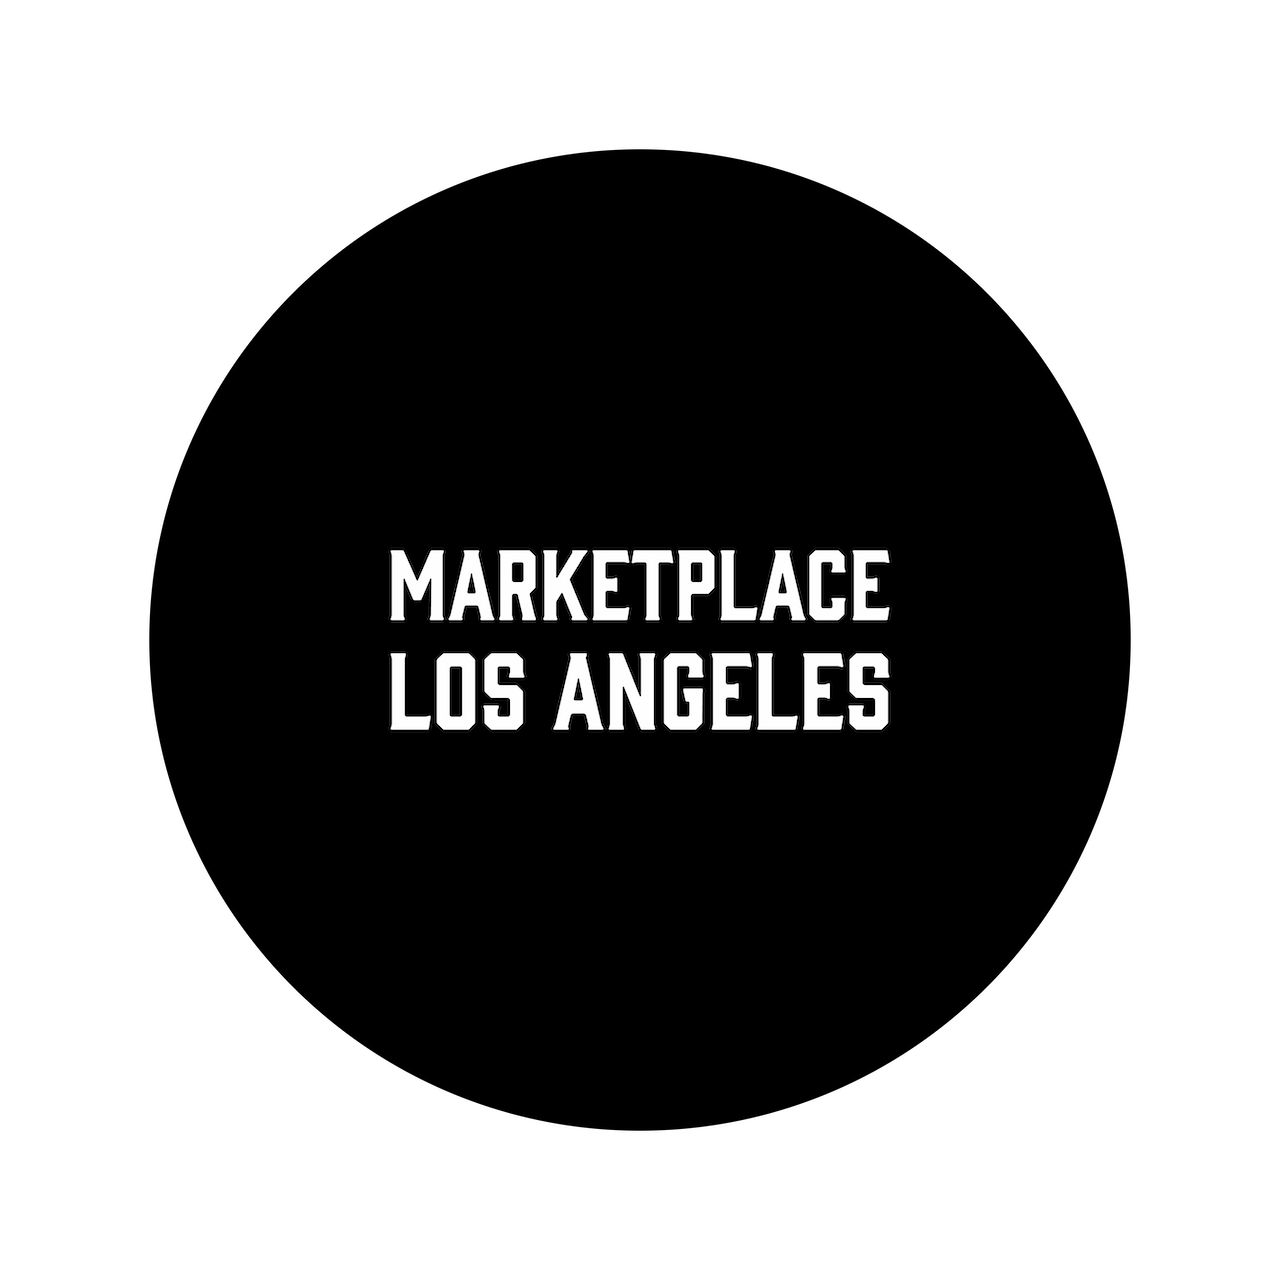 Marketplace Los Angeles